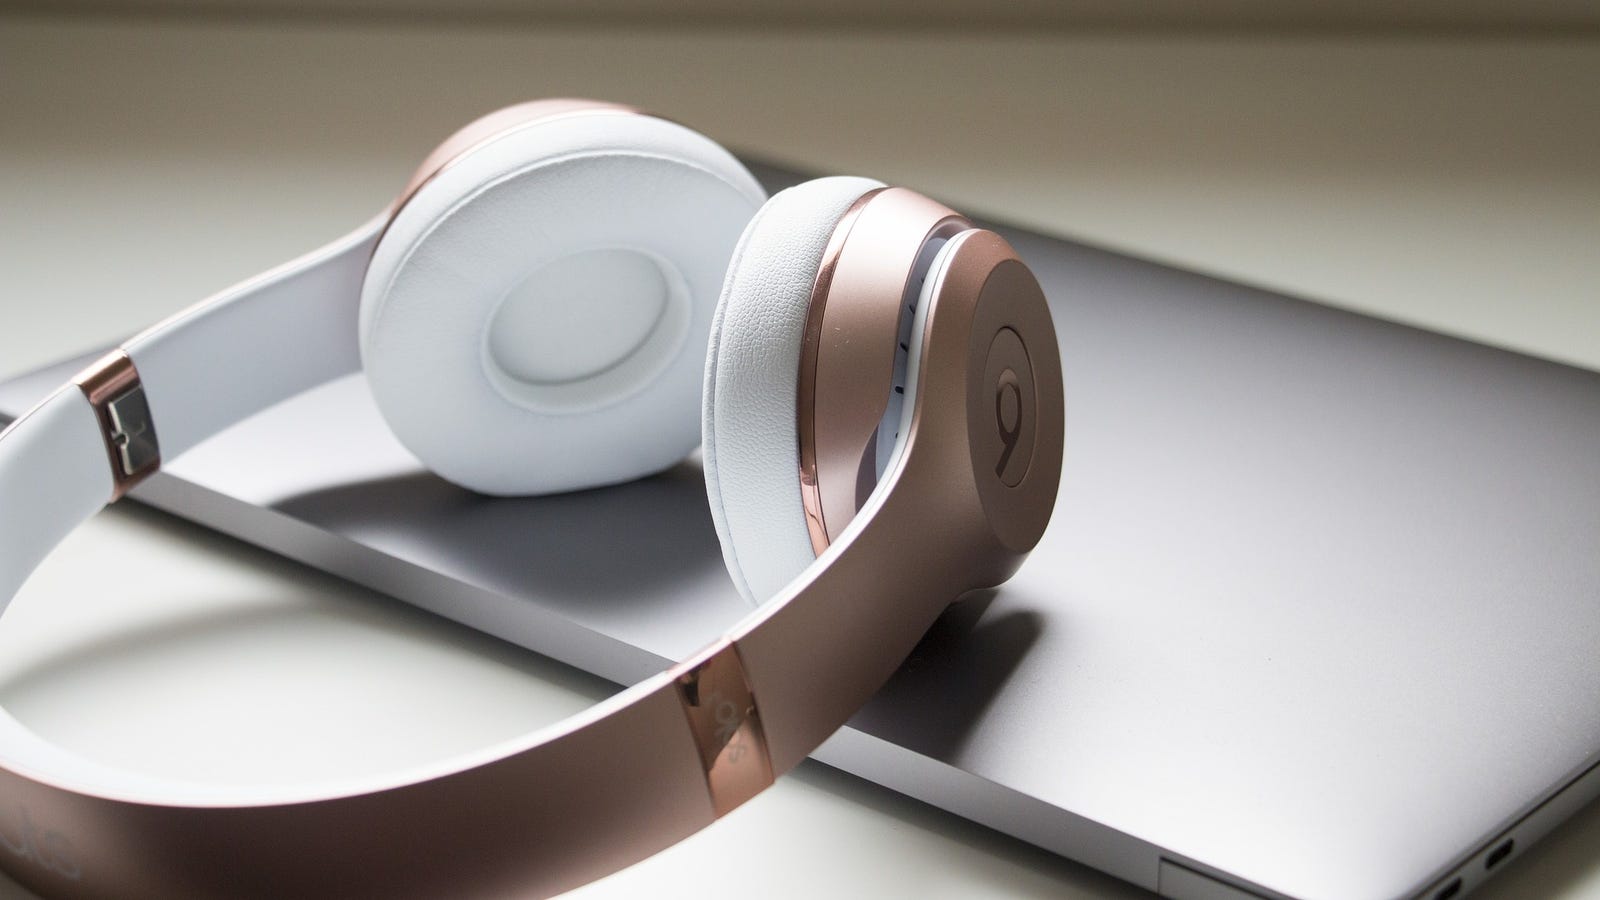 Get Free Beats Headphones From Apple's 'Back to School ...